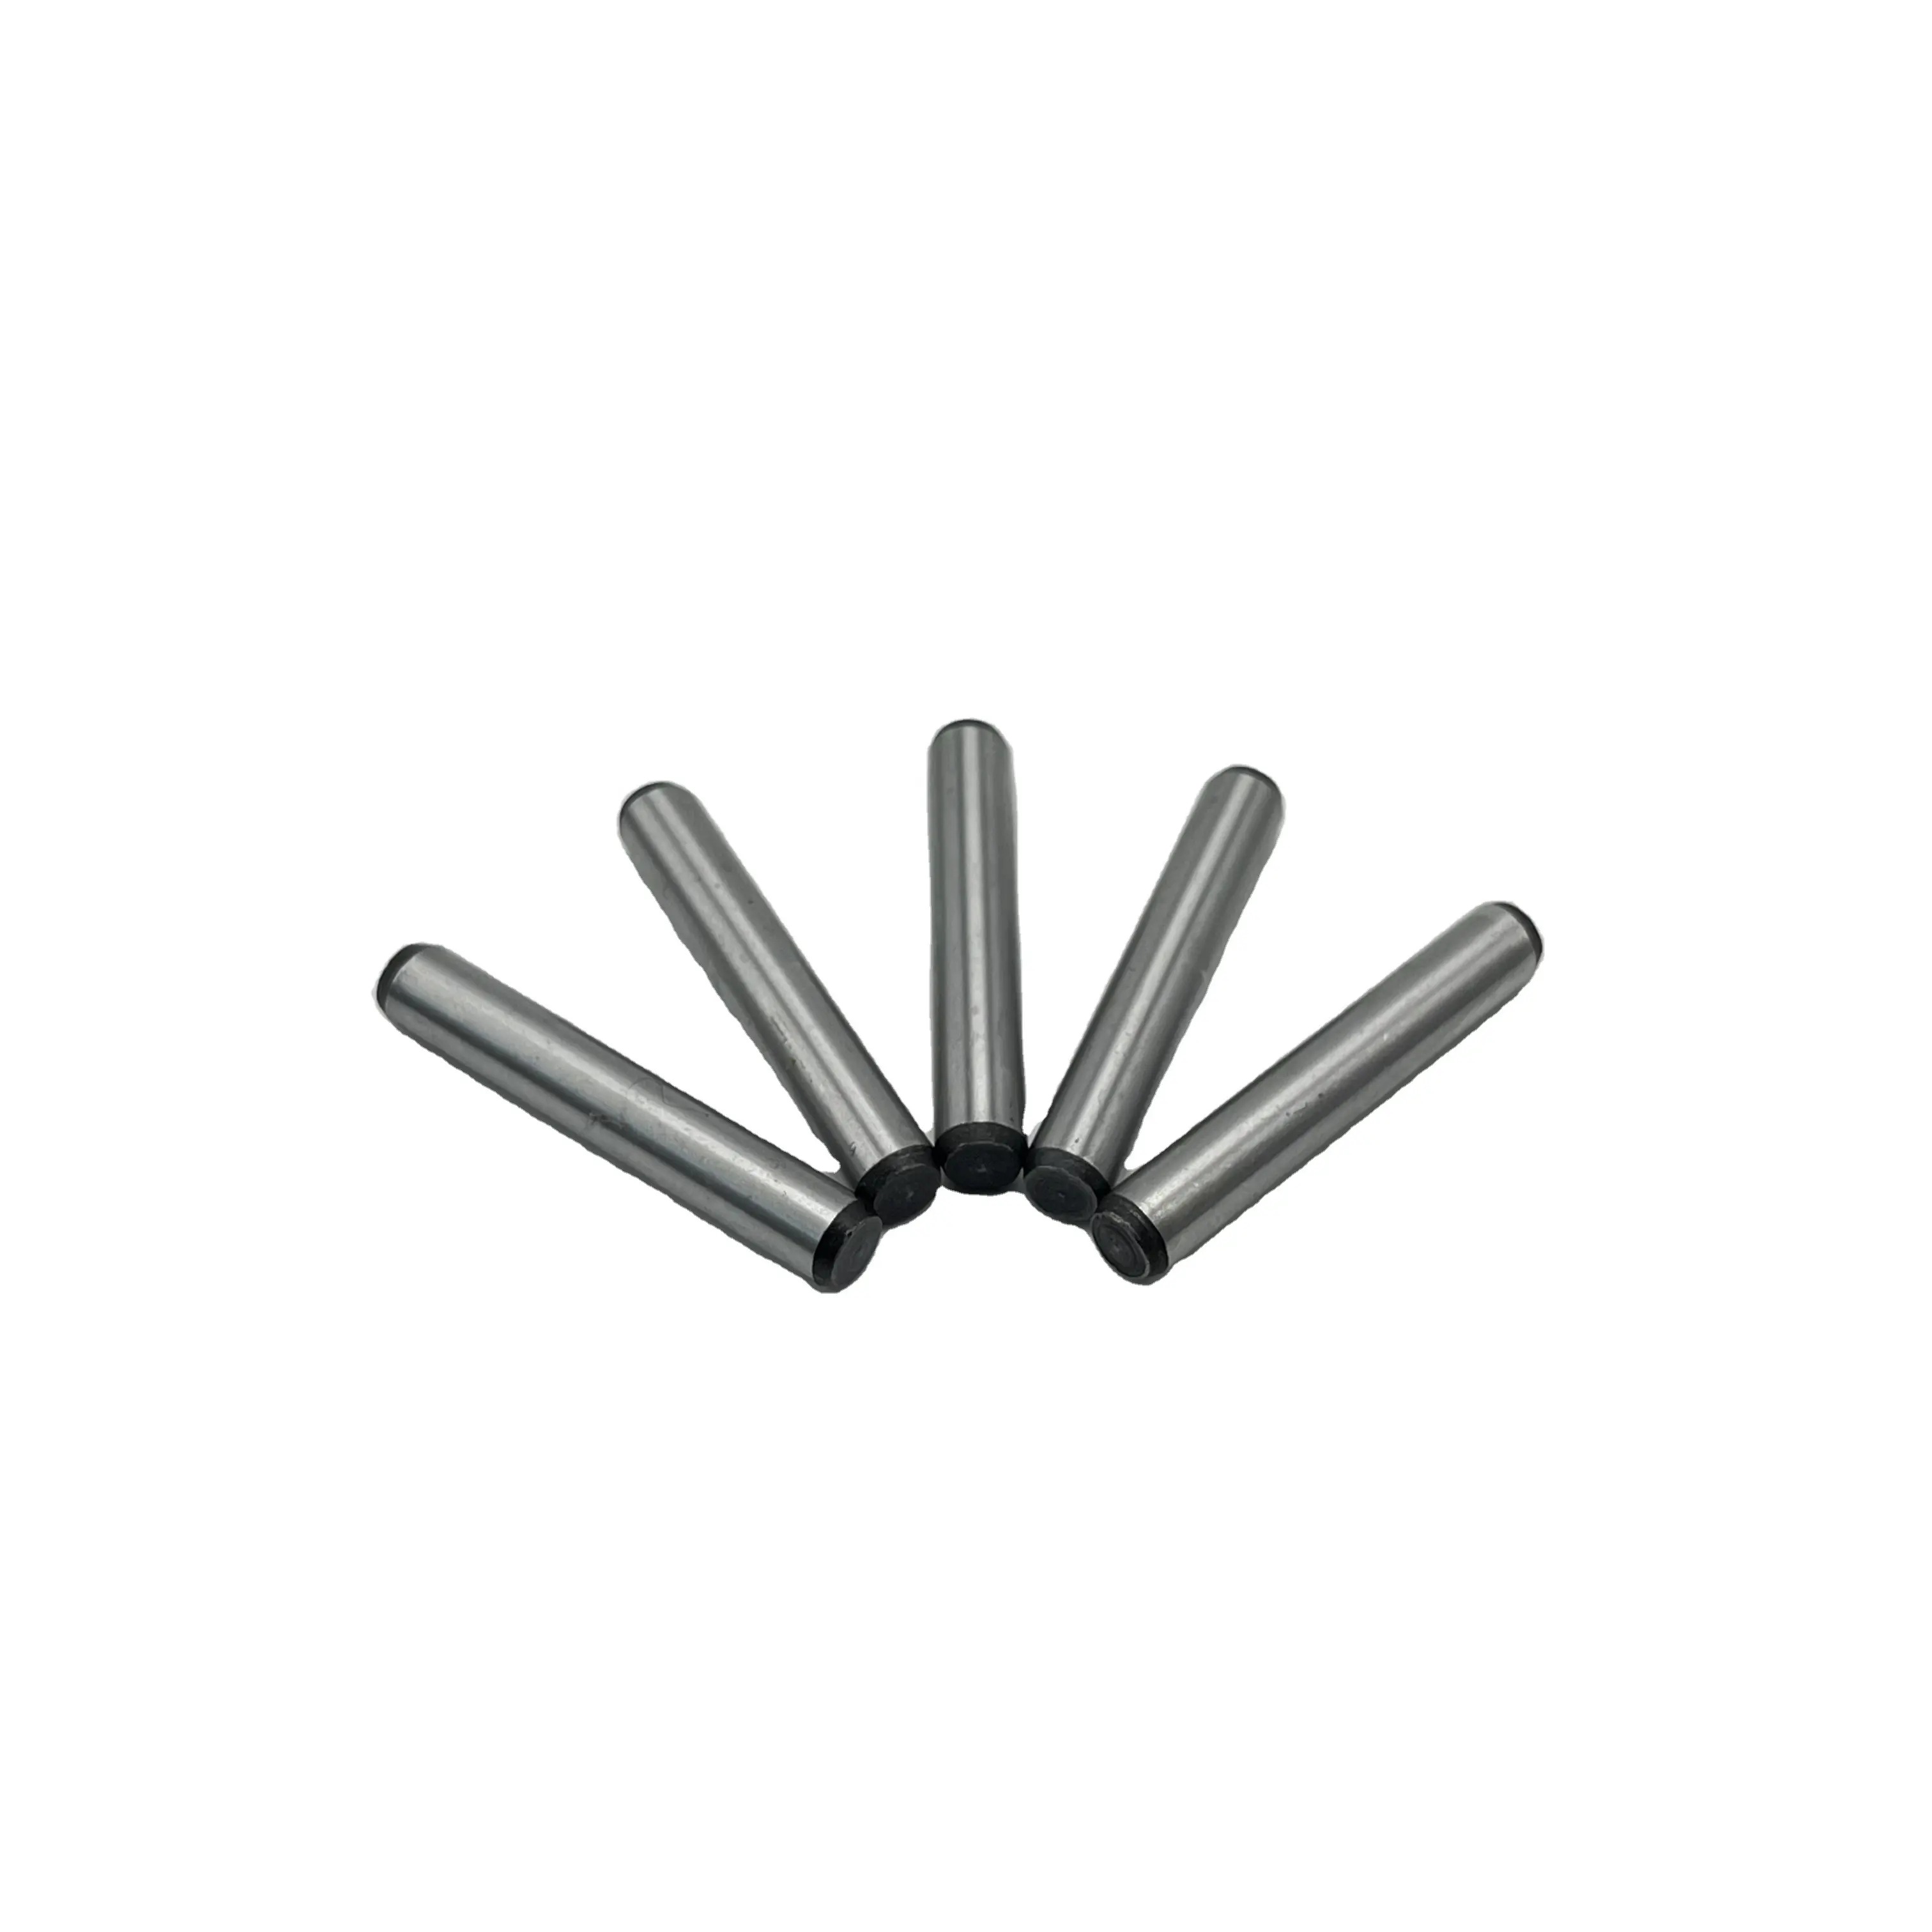 Precision Dowel Pins High Precision Straight Carbon Steel Dowel Pins